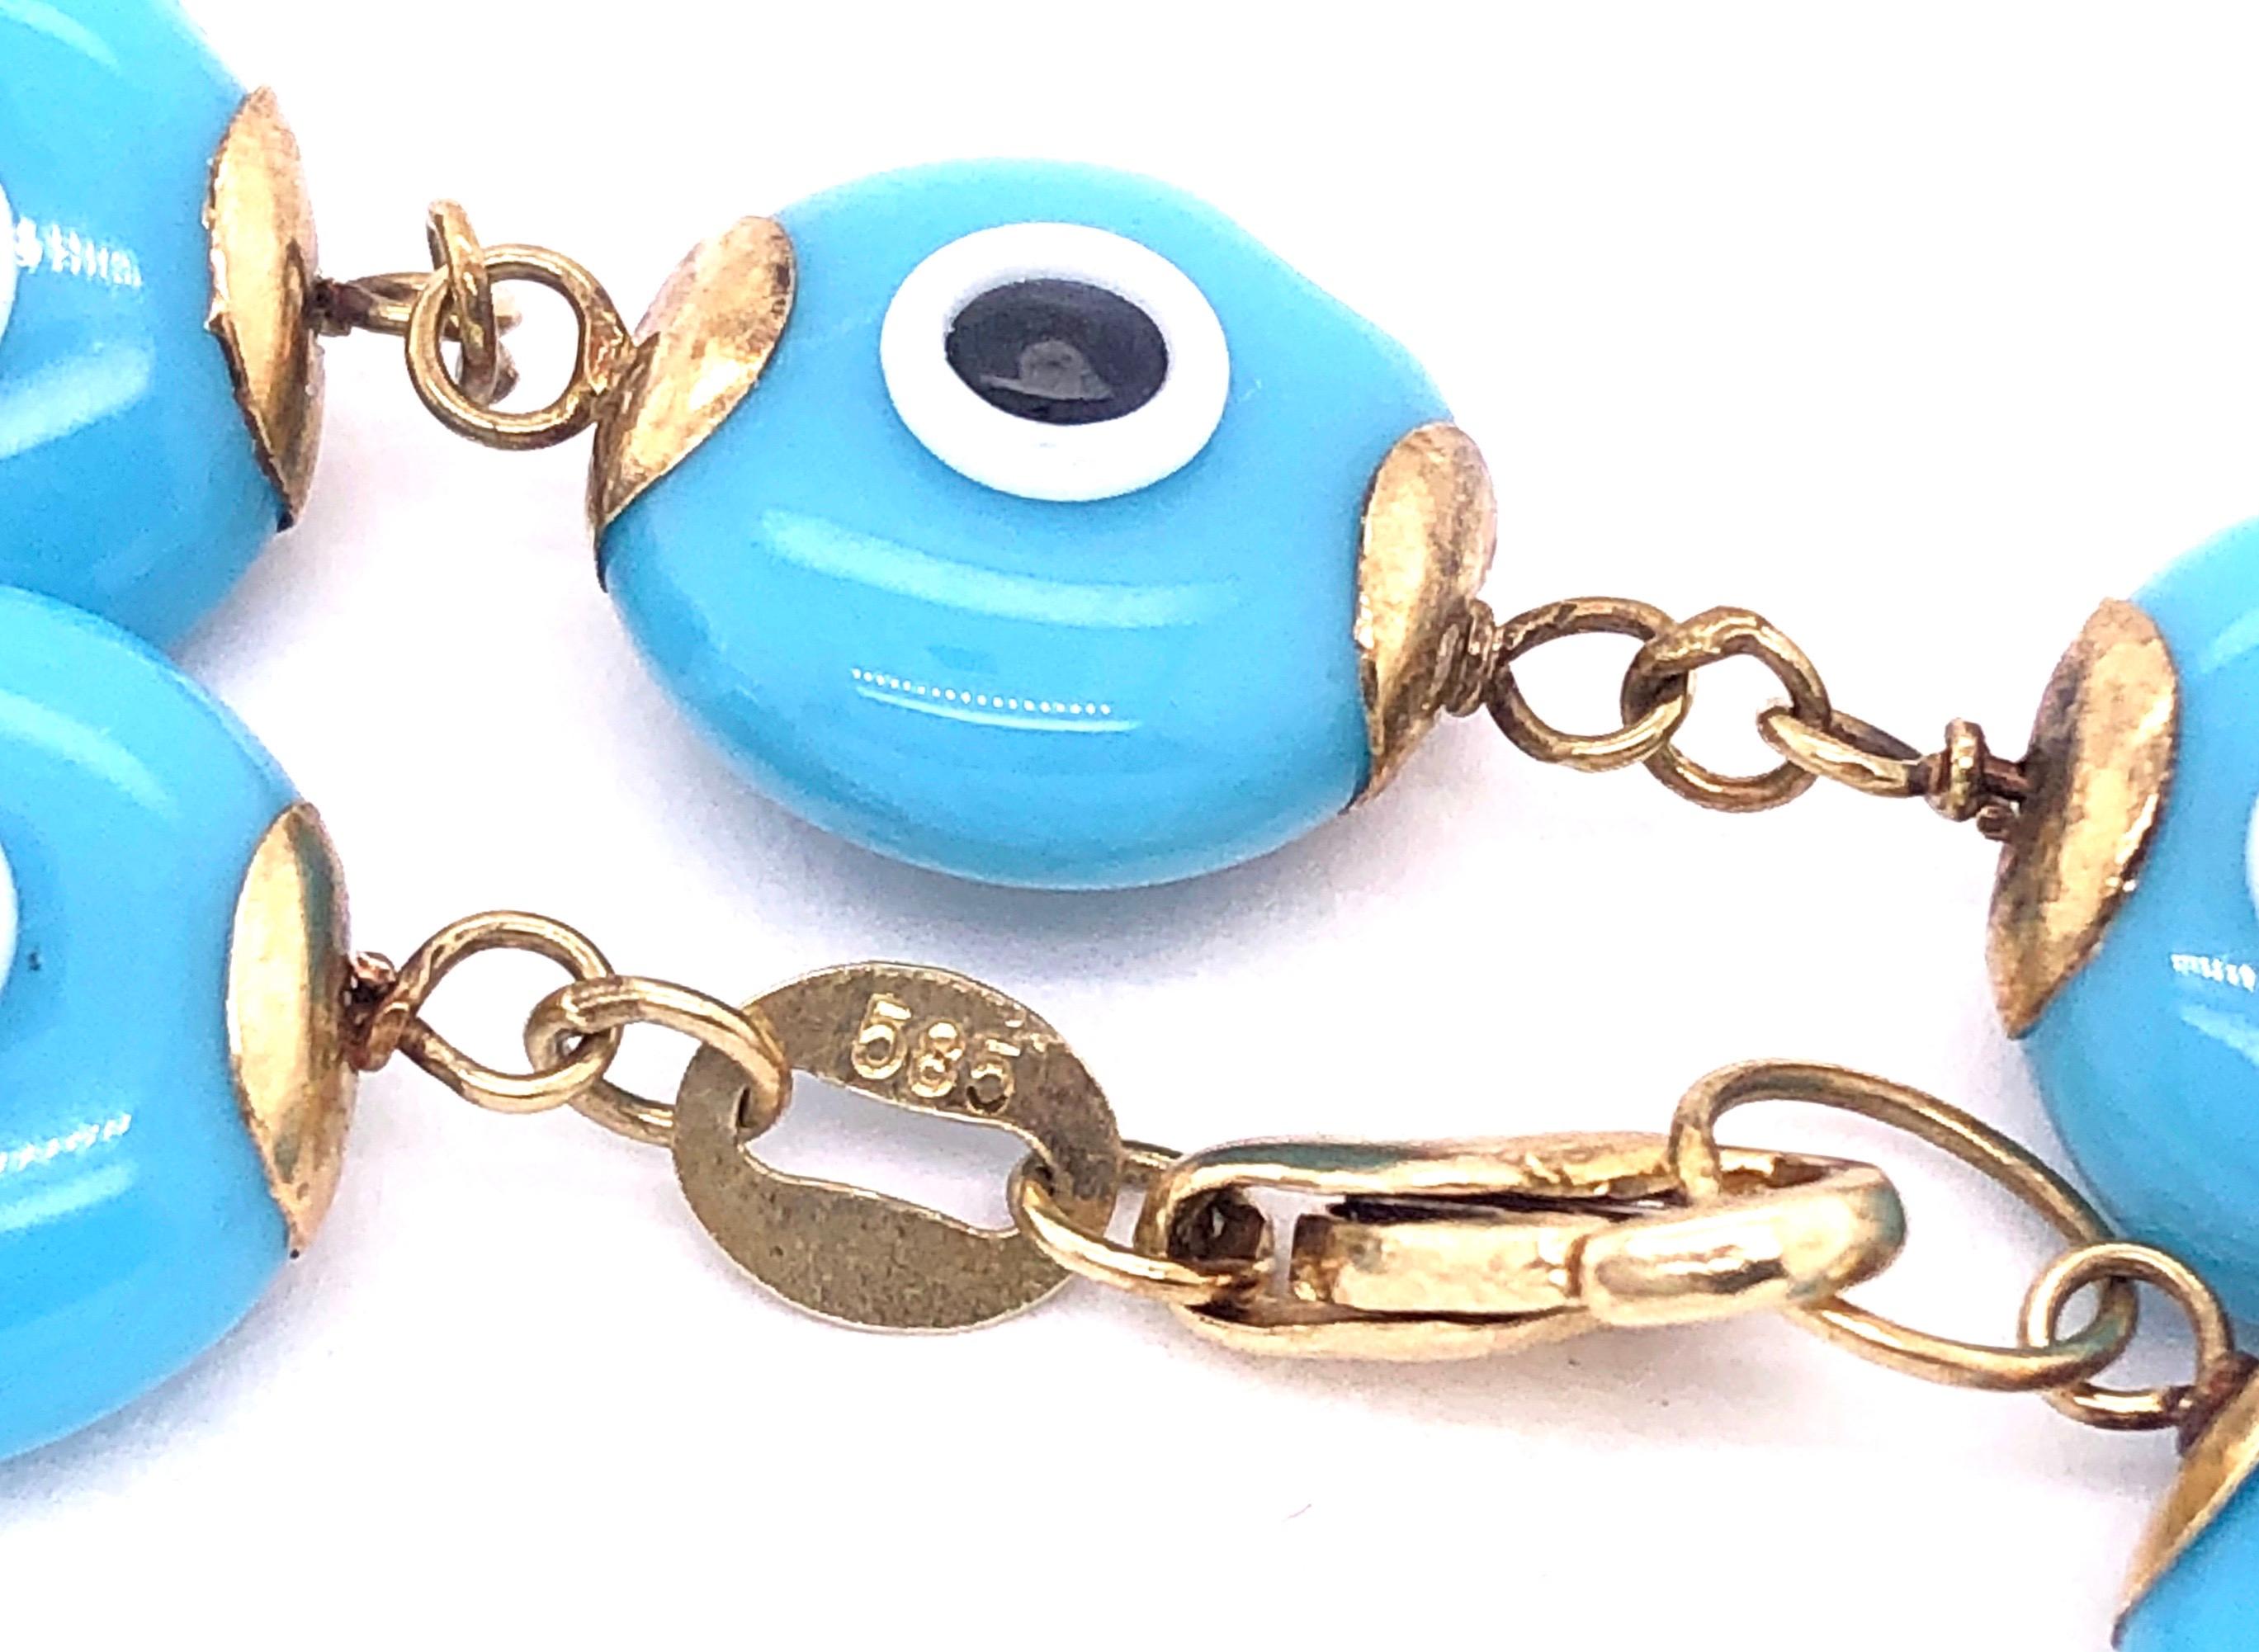 14 Karat Yellow Gold 7.5 Inch Blue Ceramic Evil Eye Charm Bracelet
9 grams total weight.
10 mm ceramic bead size